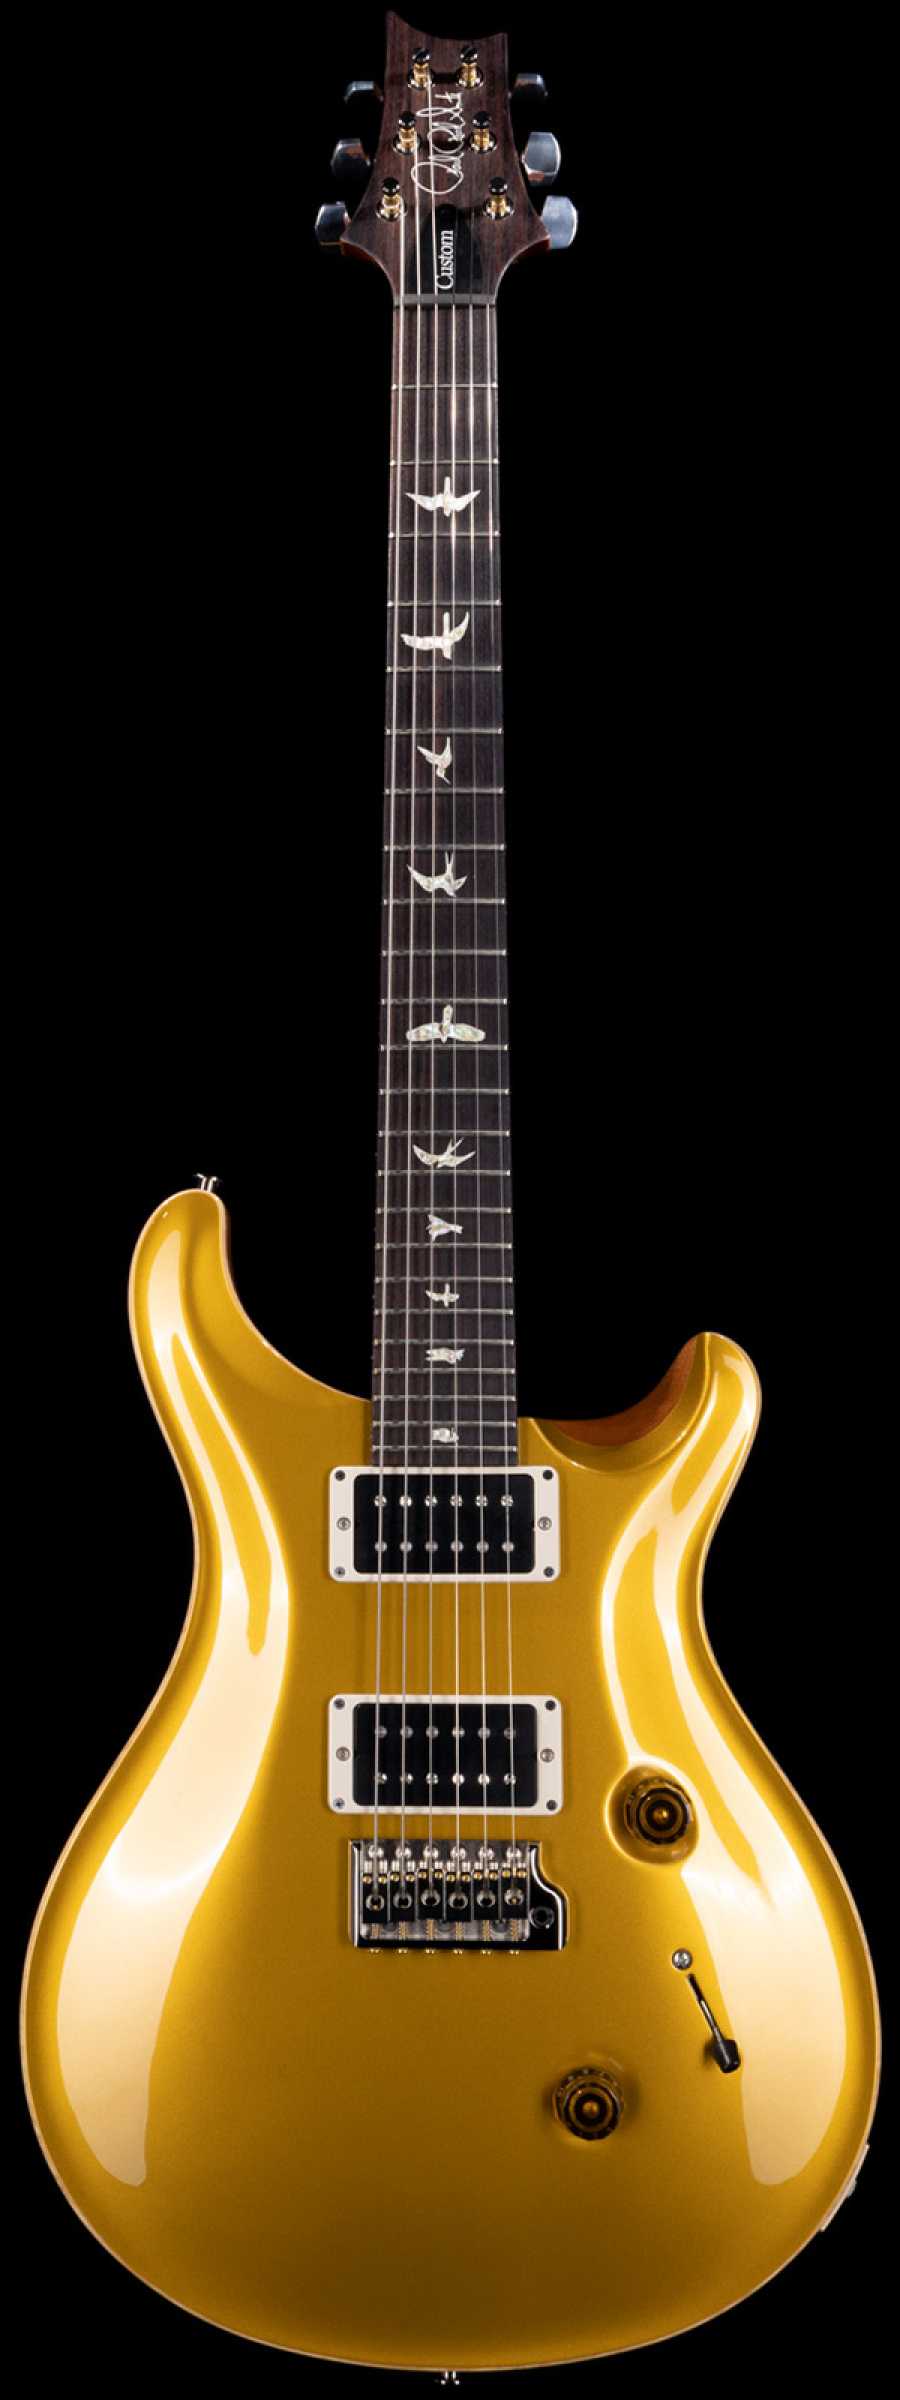 PRS Custom Pattern Thin Neck Carve 85/15 Pickups Gold Top WildCat Guitars